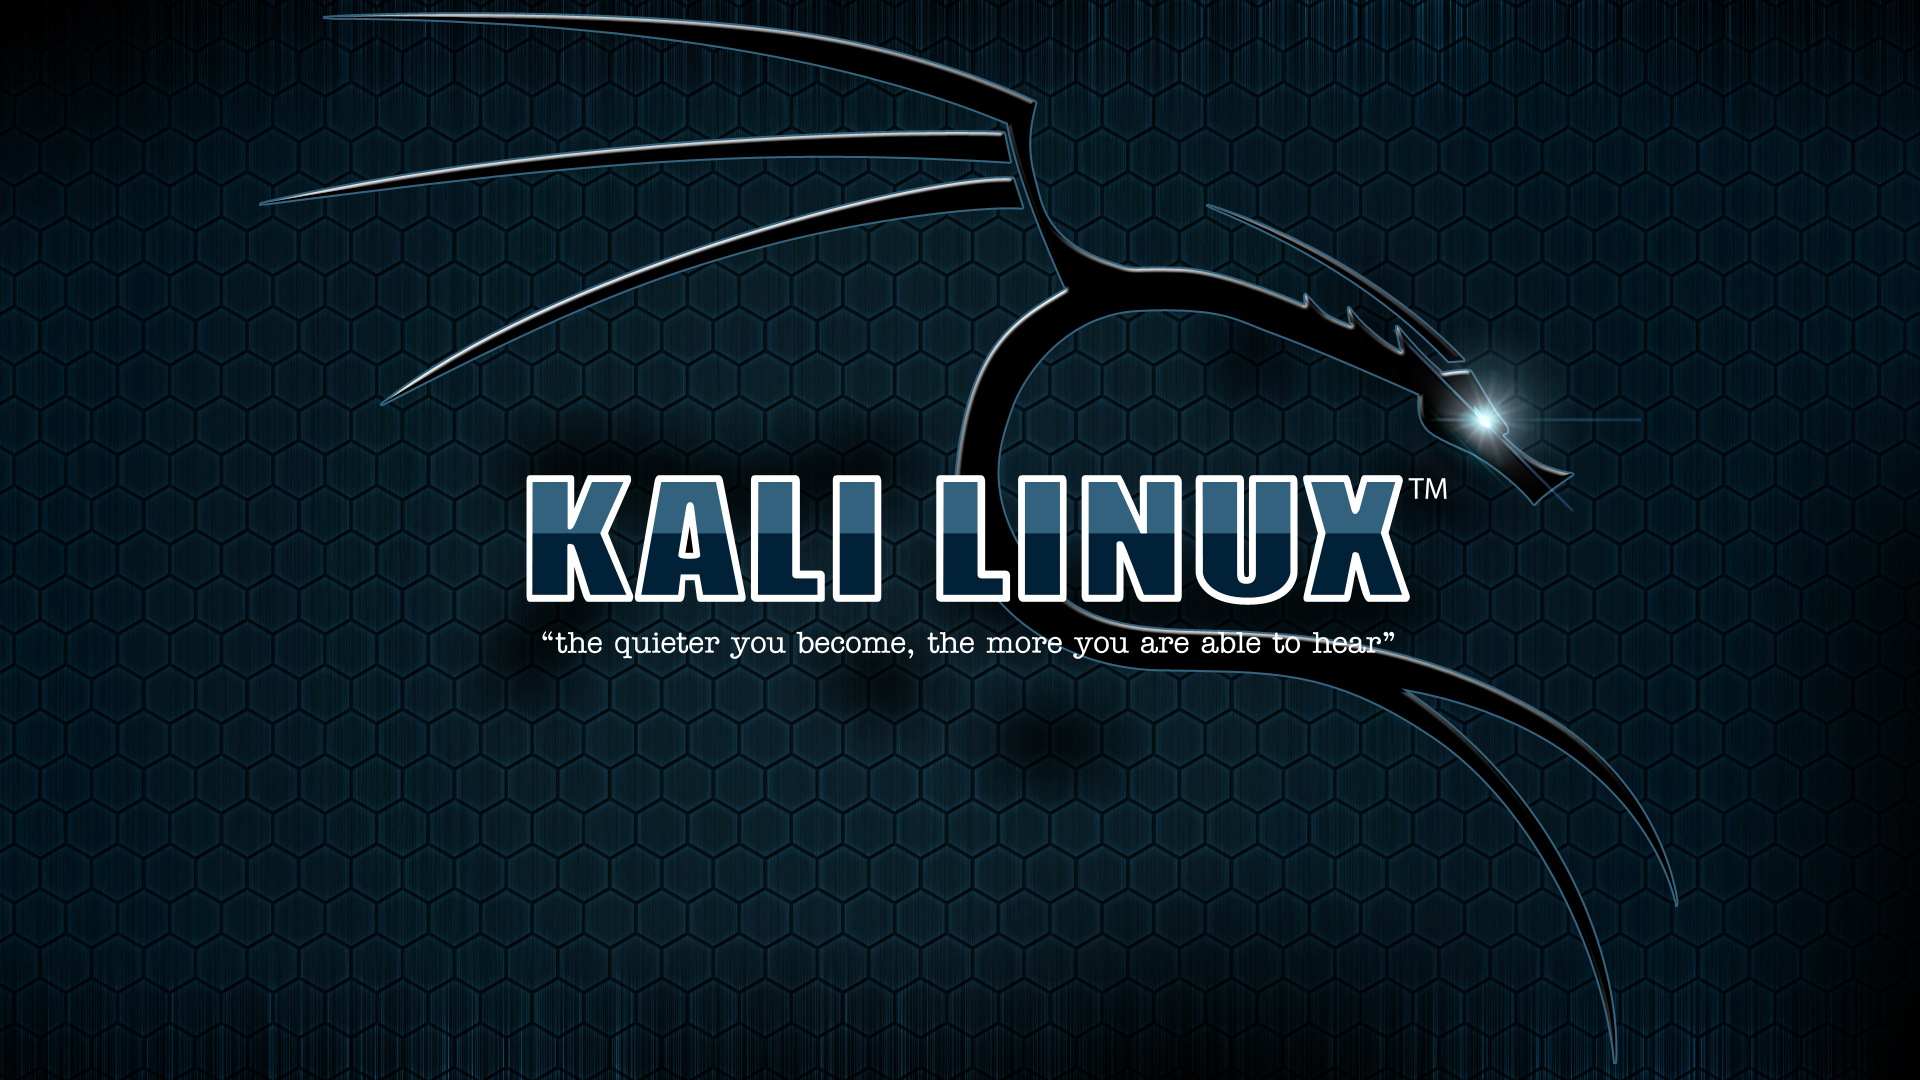 Kali Linux Typography Texture 1920x1080